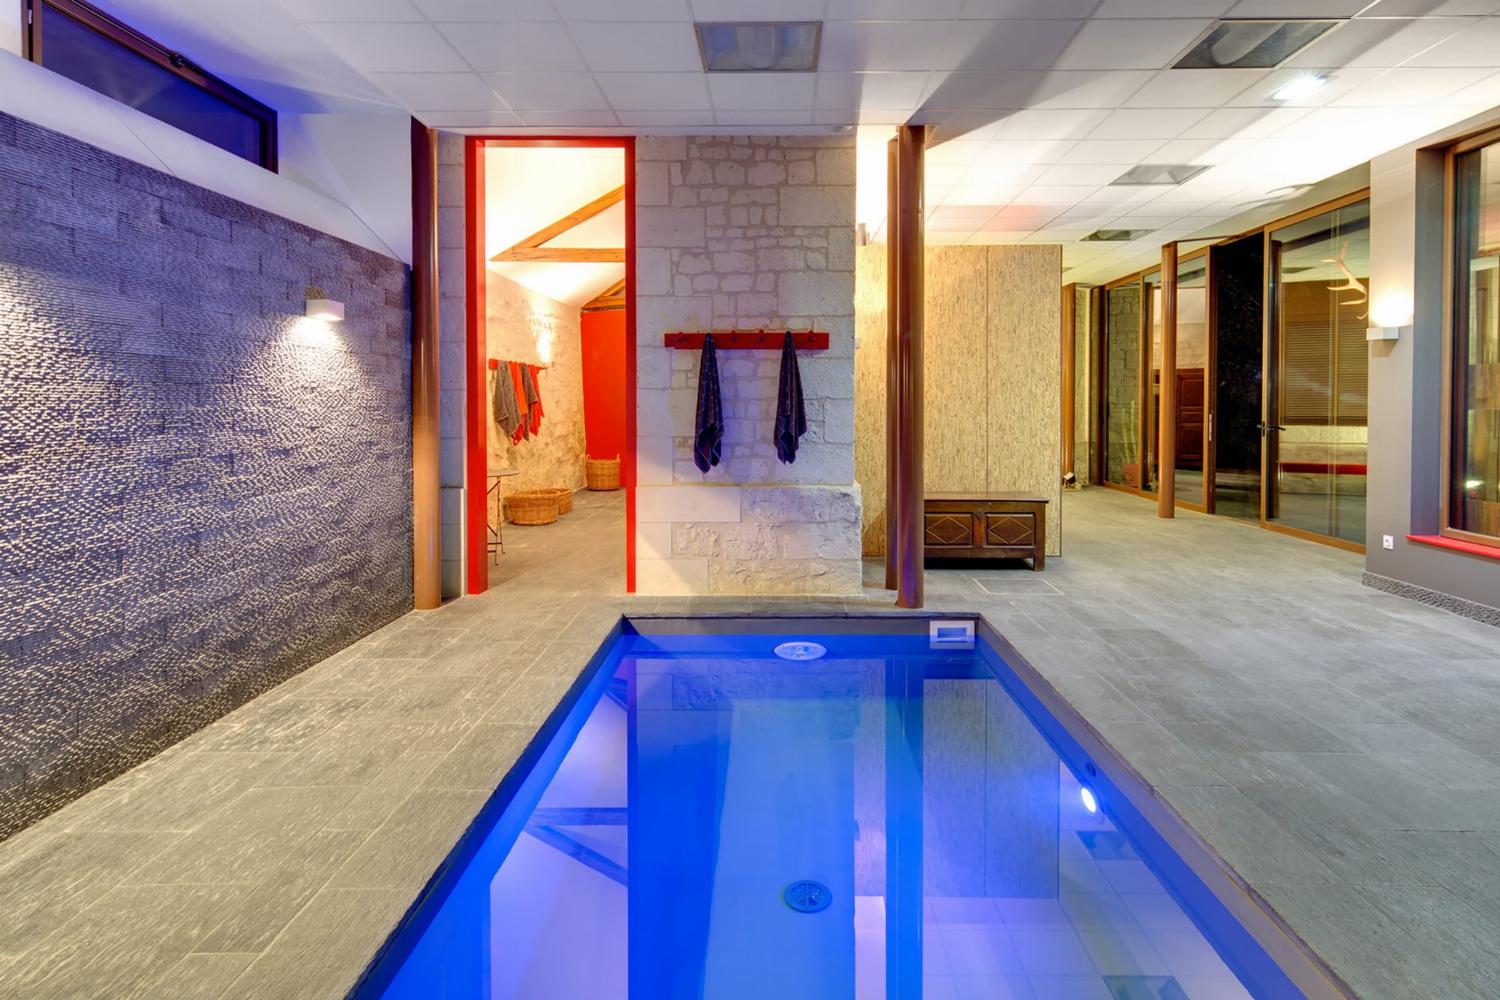 Private pool, spa and sauna